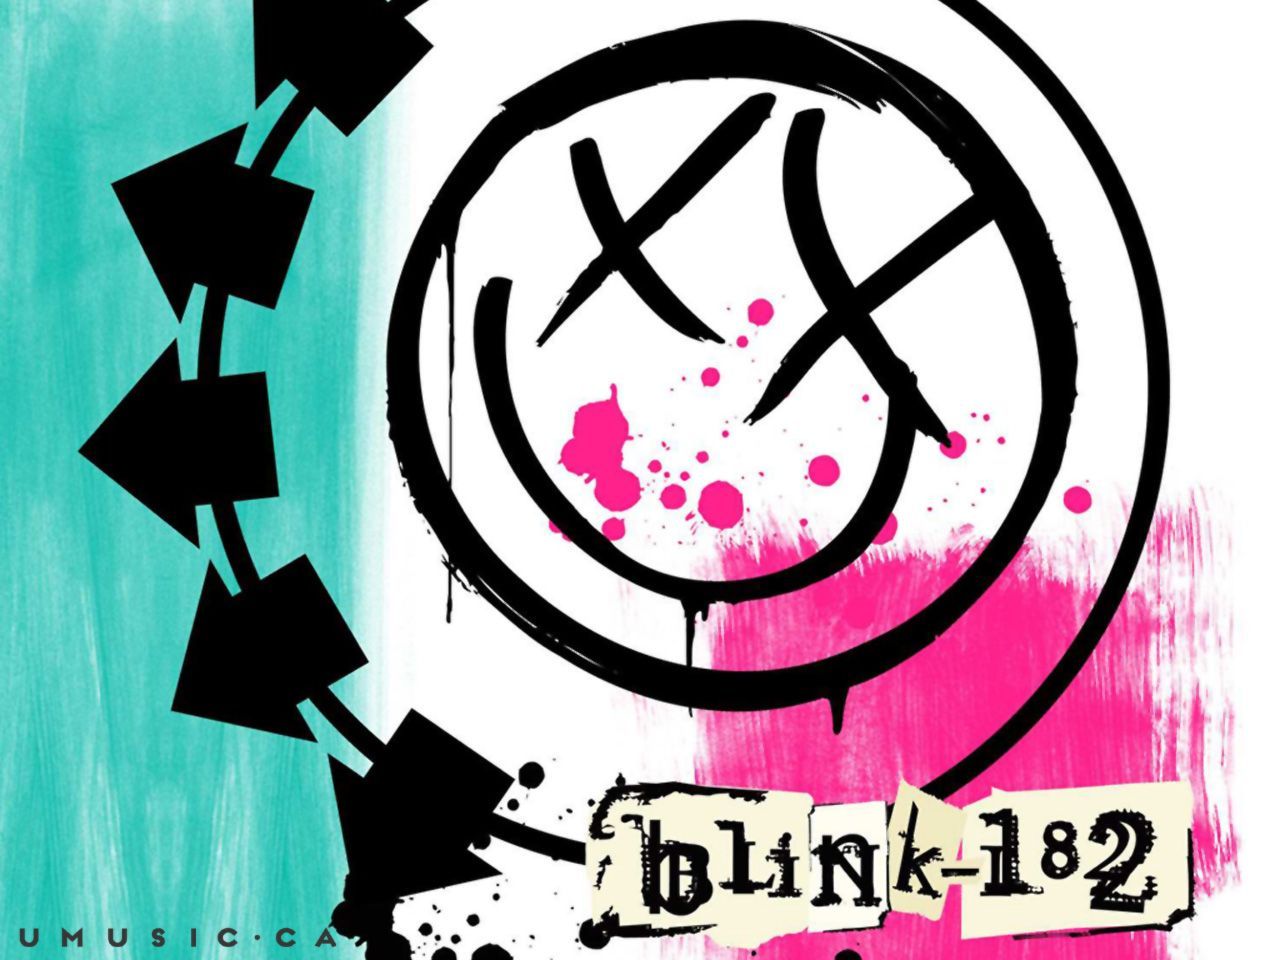 Blink 182 News | Wallpaper in Pixels